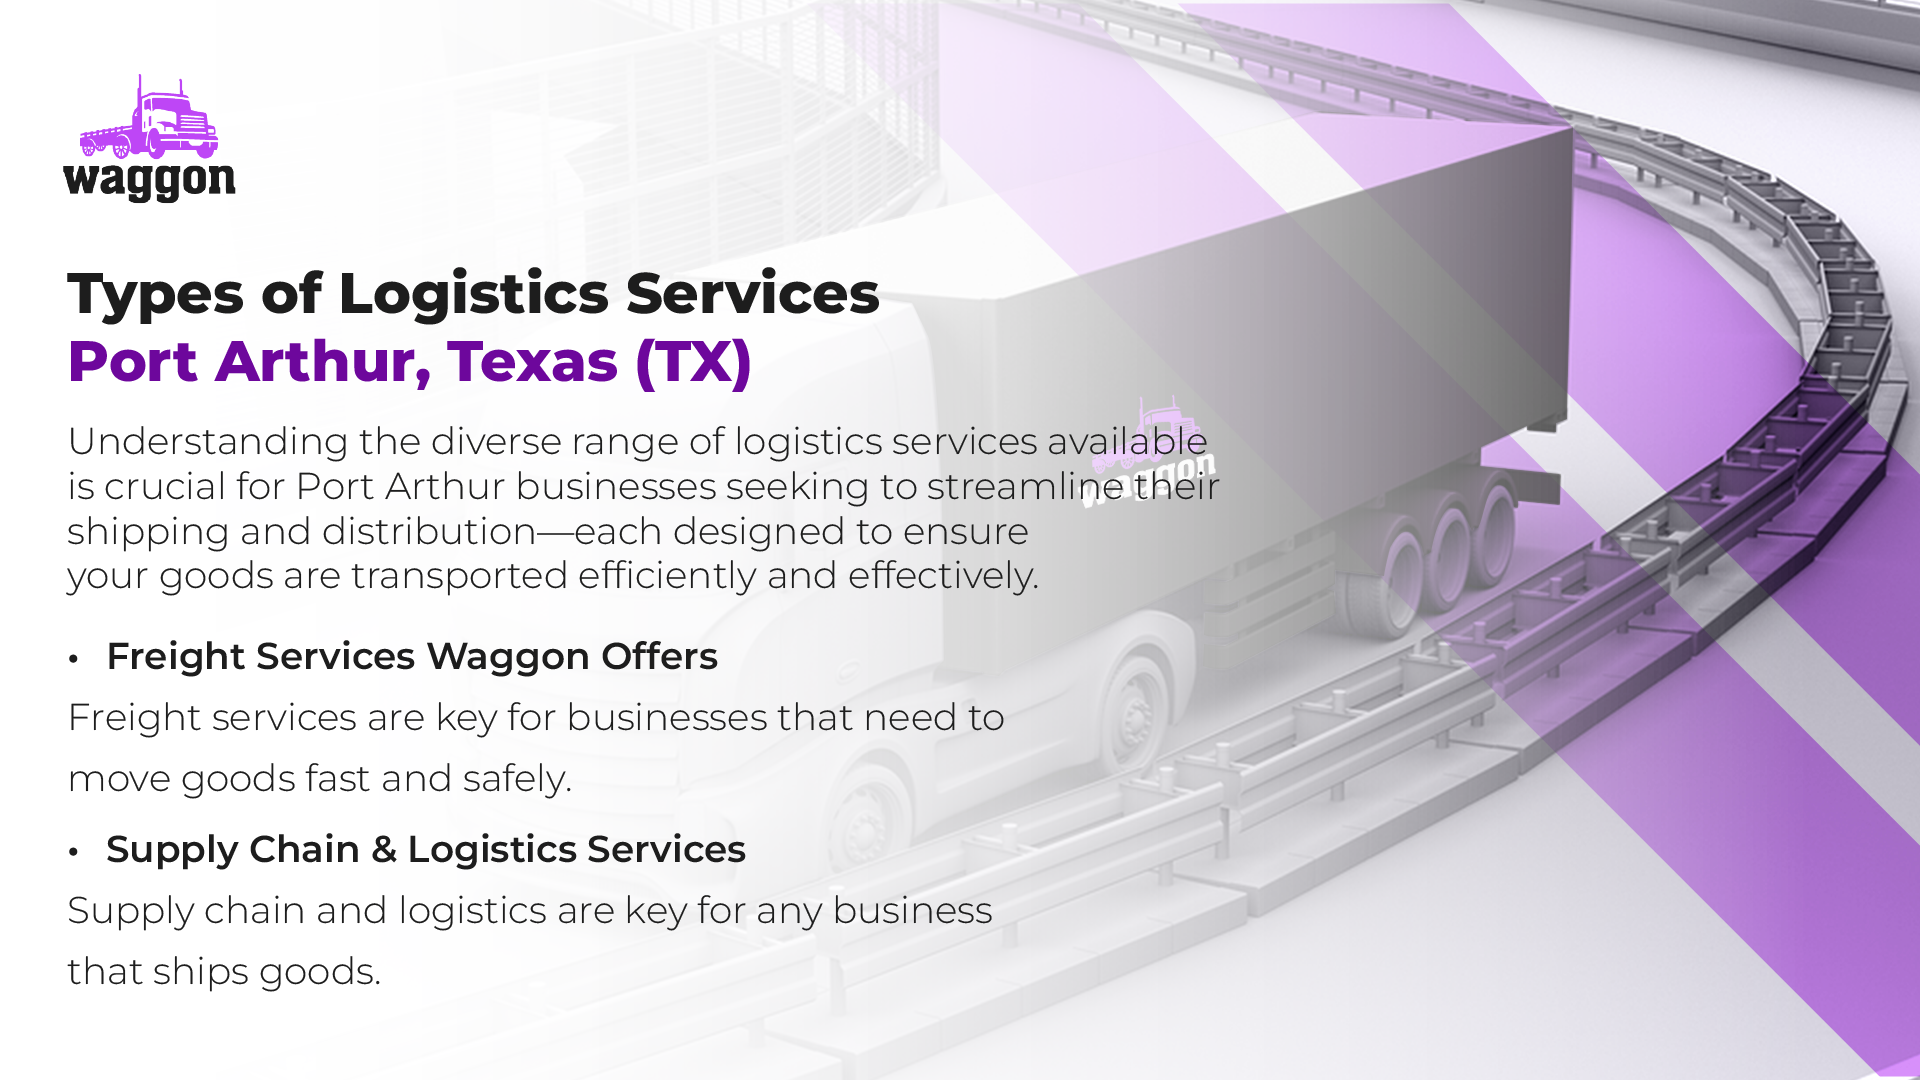 Types of Logistics Services in Port Arthur, Texas (TX)